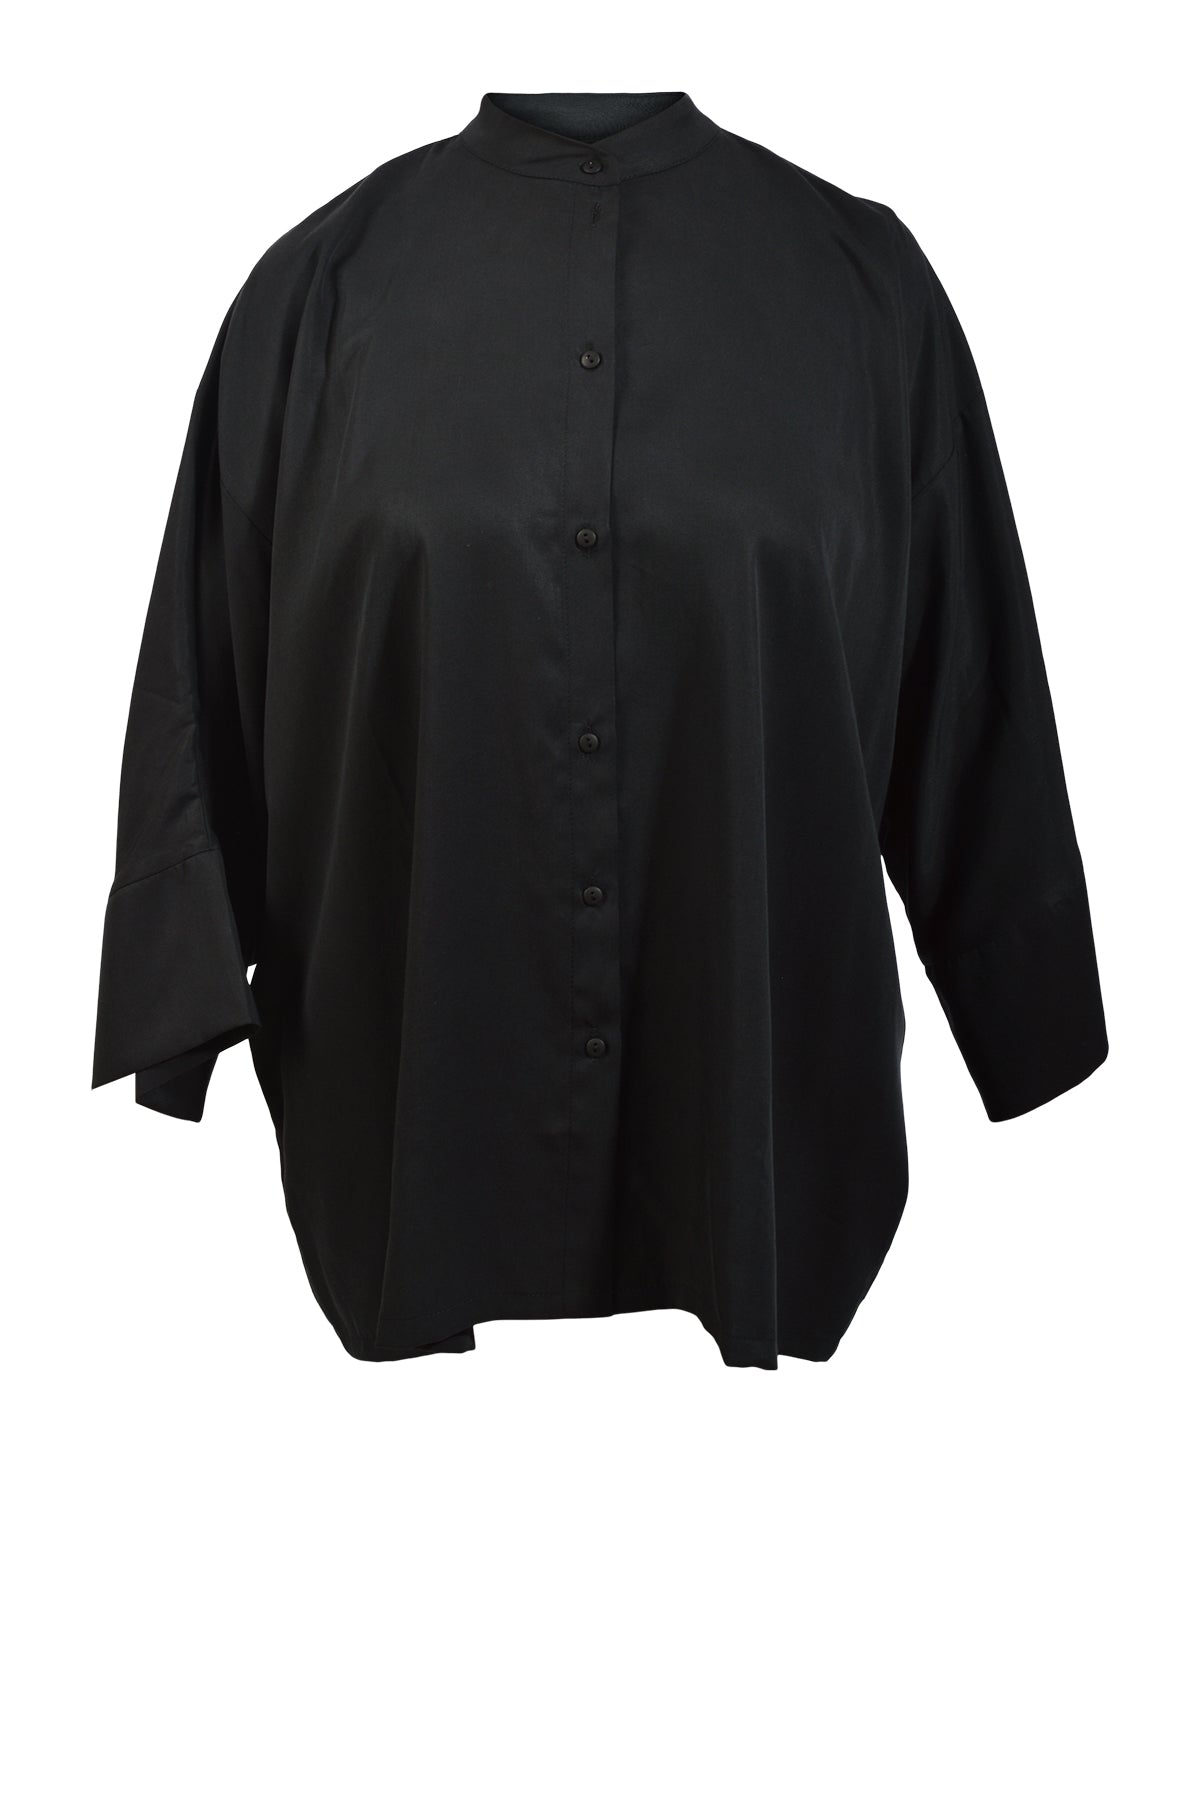 Lotus Eaters Shannen shirt, Black